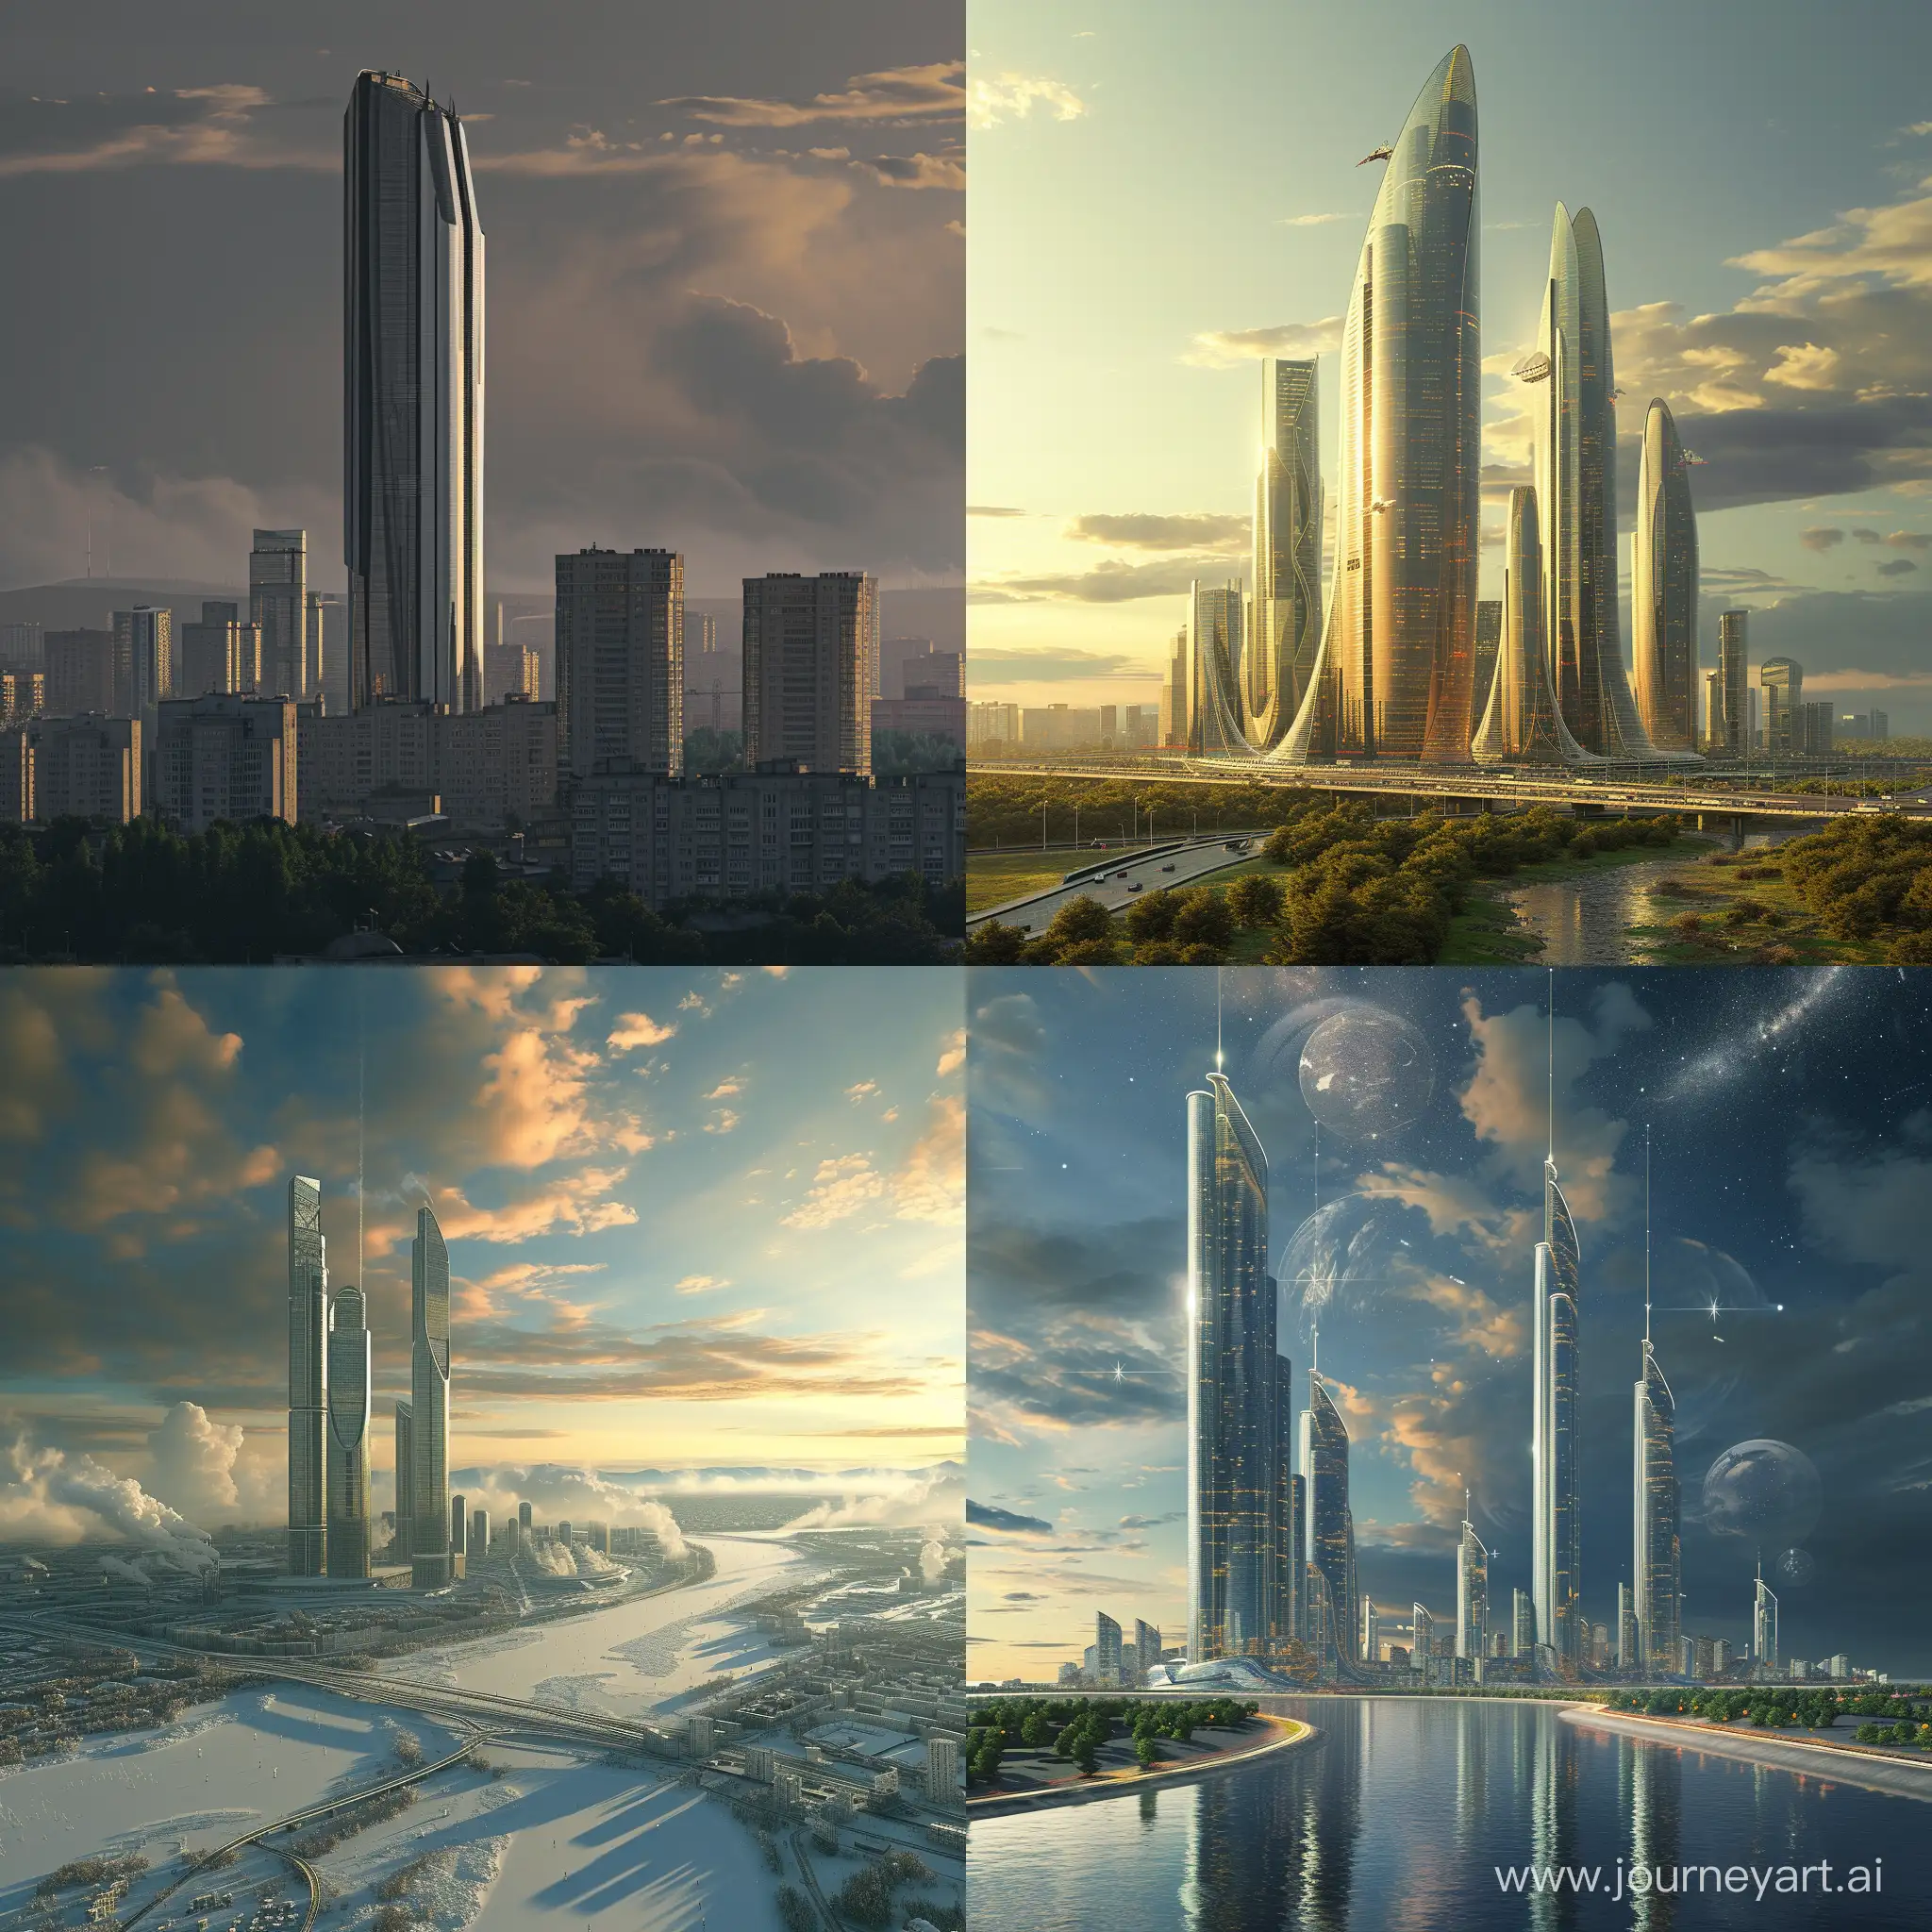 Futuristic-Cityscape-of-Chelyabinsk-with-Modern-Skyscrapers